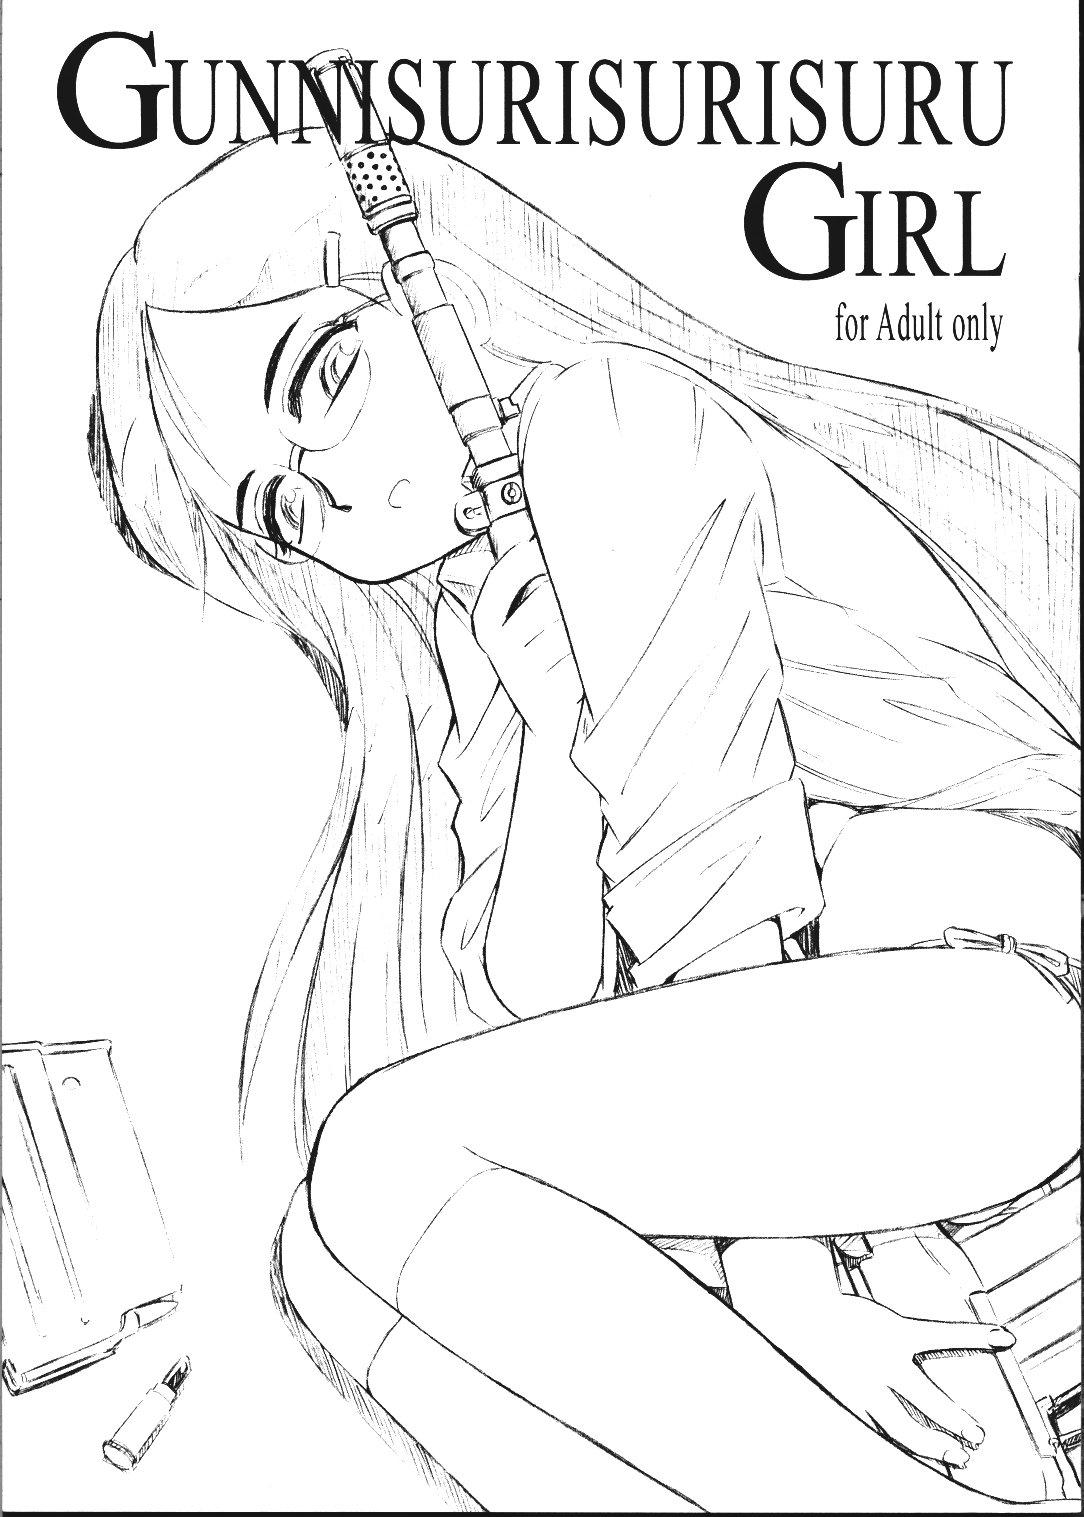 Gunnisurisurisuru Girl 0